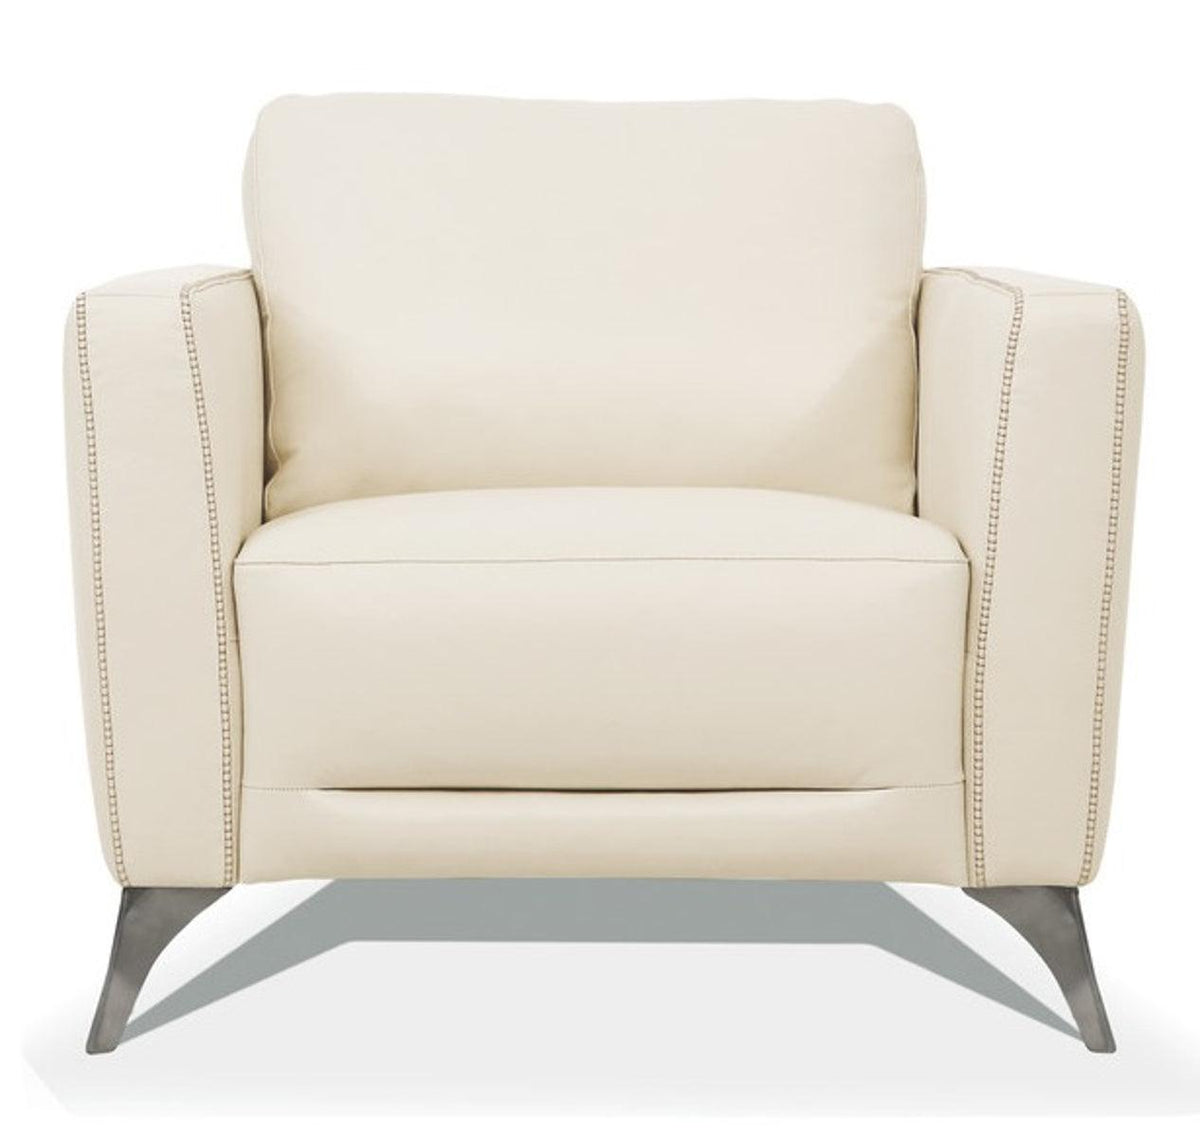 Acme Furniture Malaga Chair in Cream 55007  Las Vegas Furniture Stores